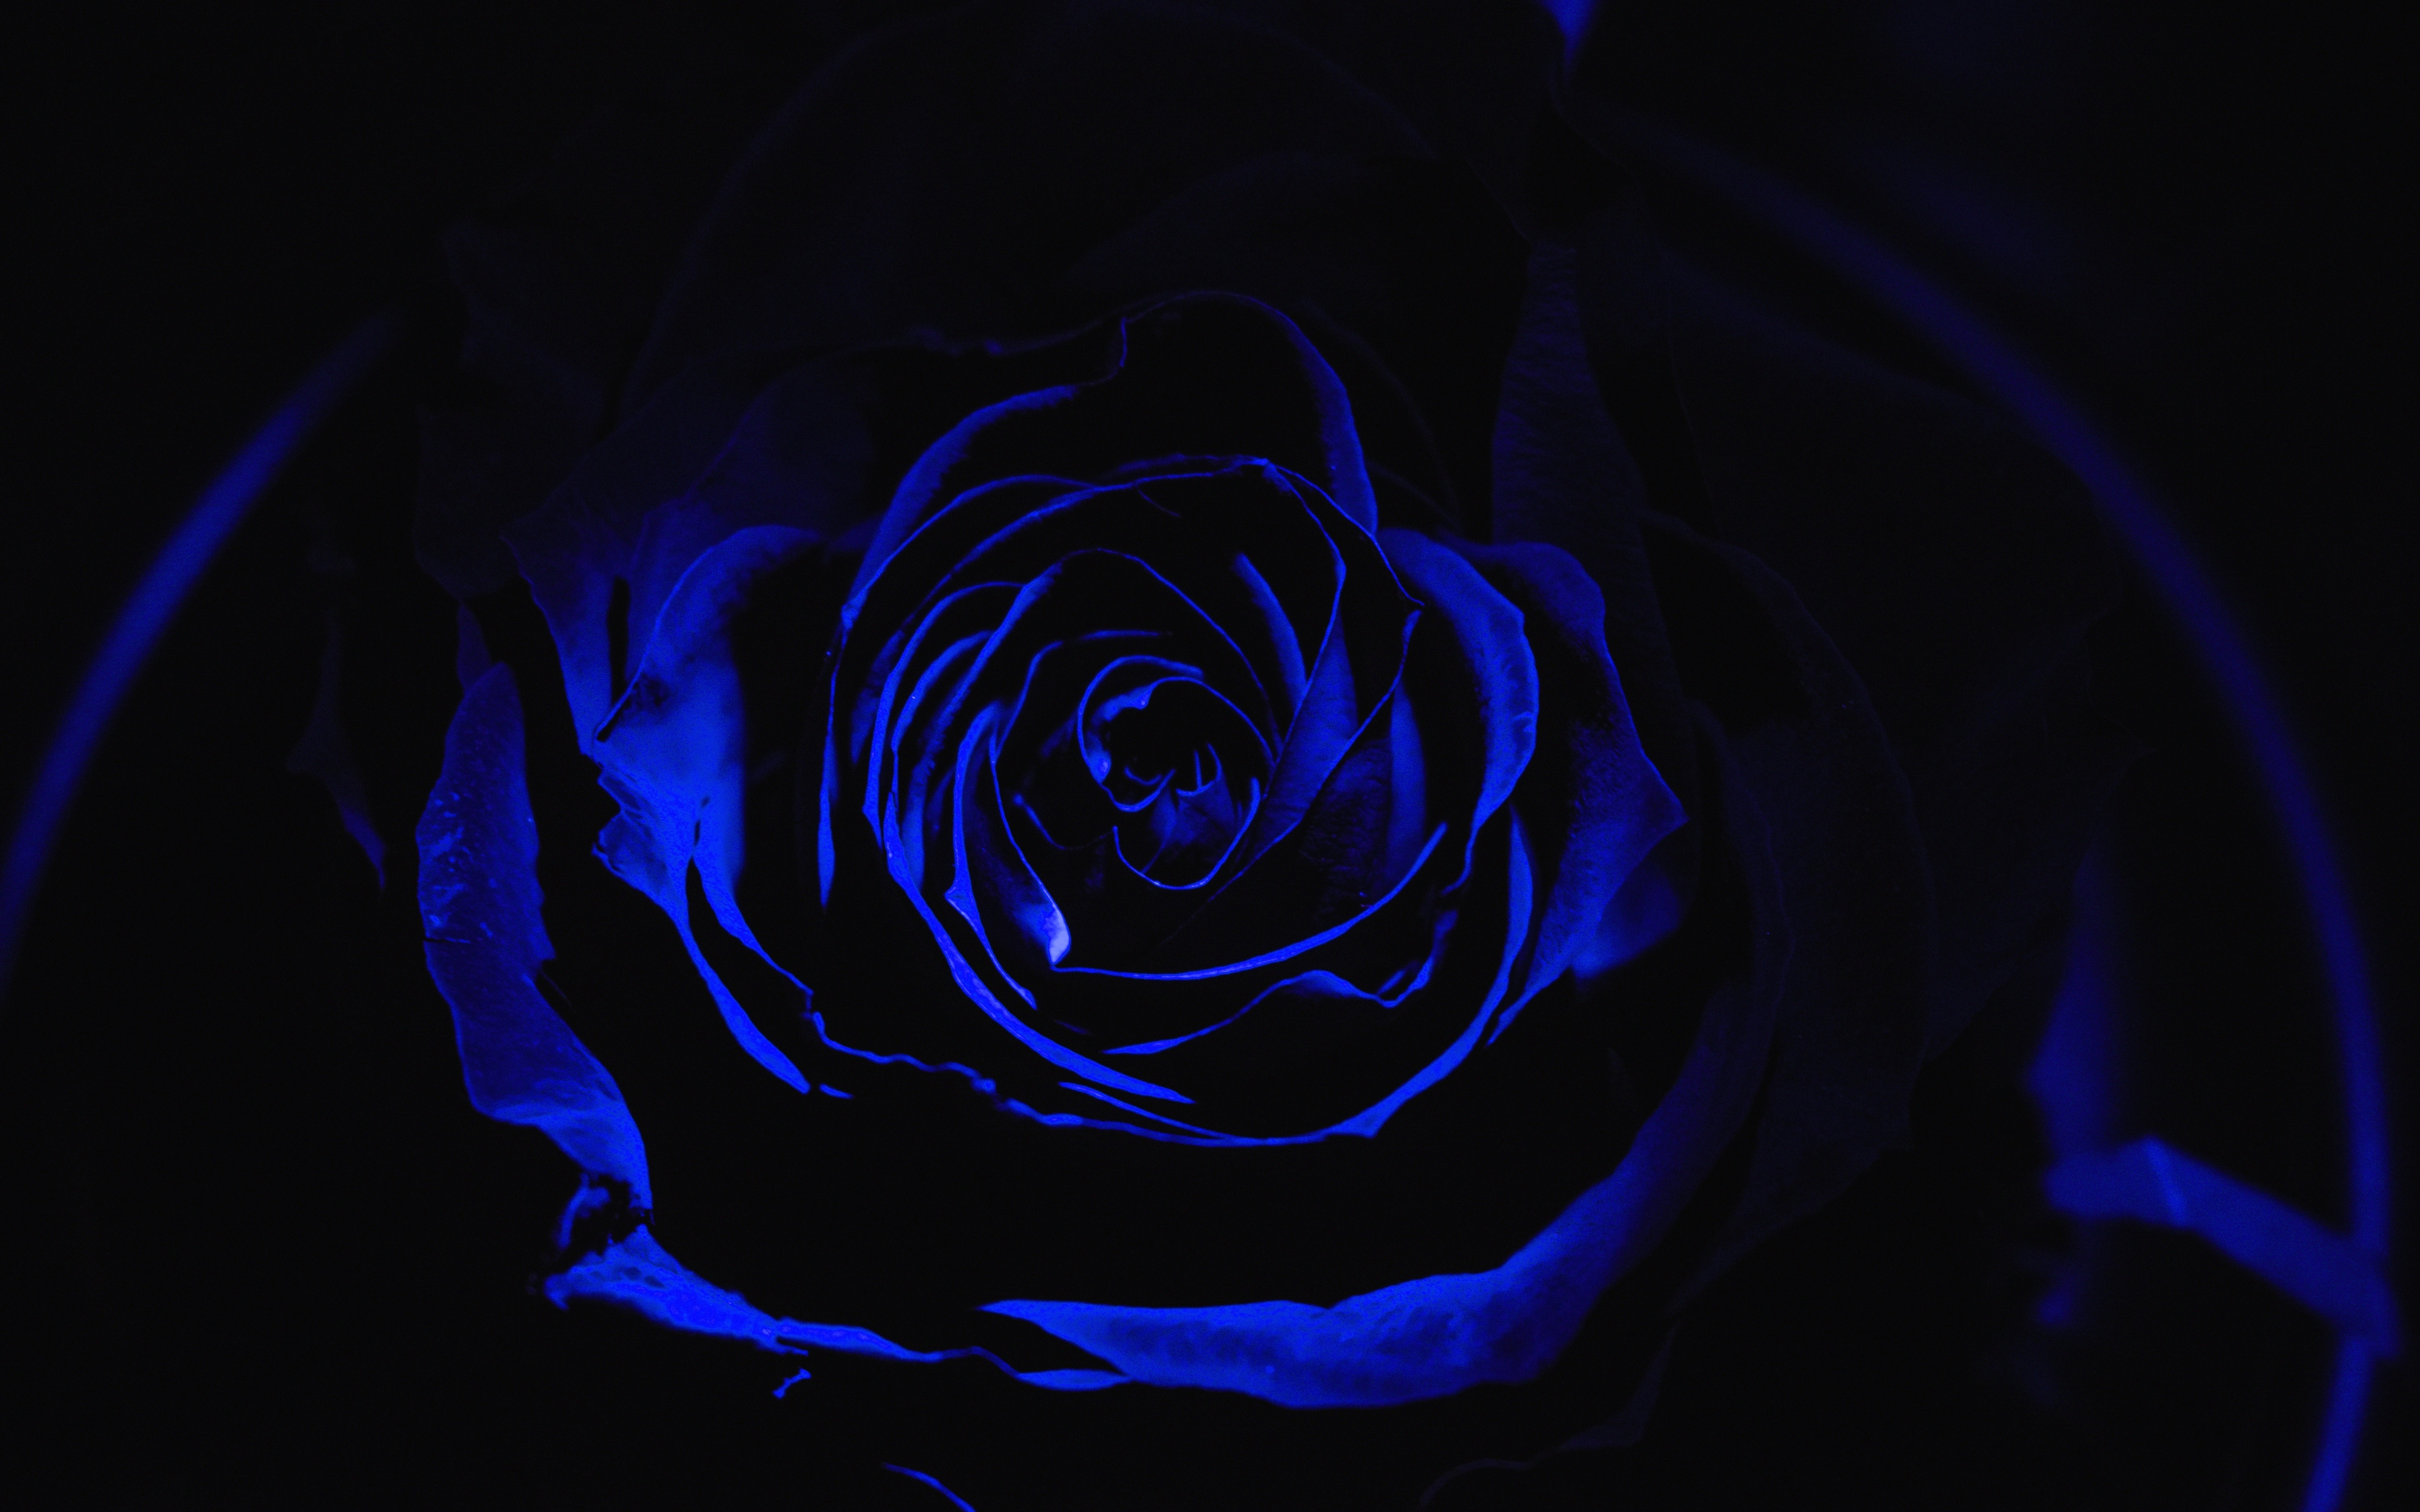 Download wallpaper 3840x2400 blue rose, dark, close up 4k wallaper, 4k  ultra hd 16:10 wallpaper, 3840x2400 hd background, 10127